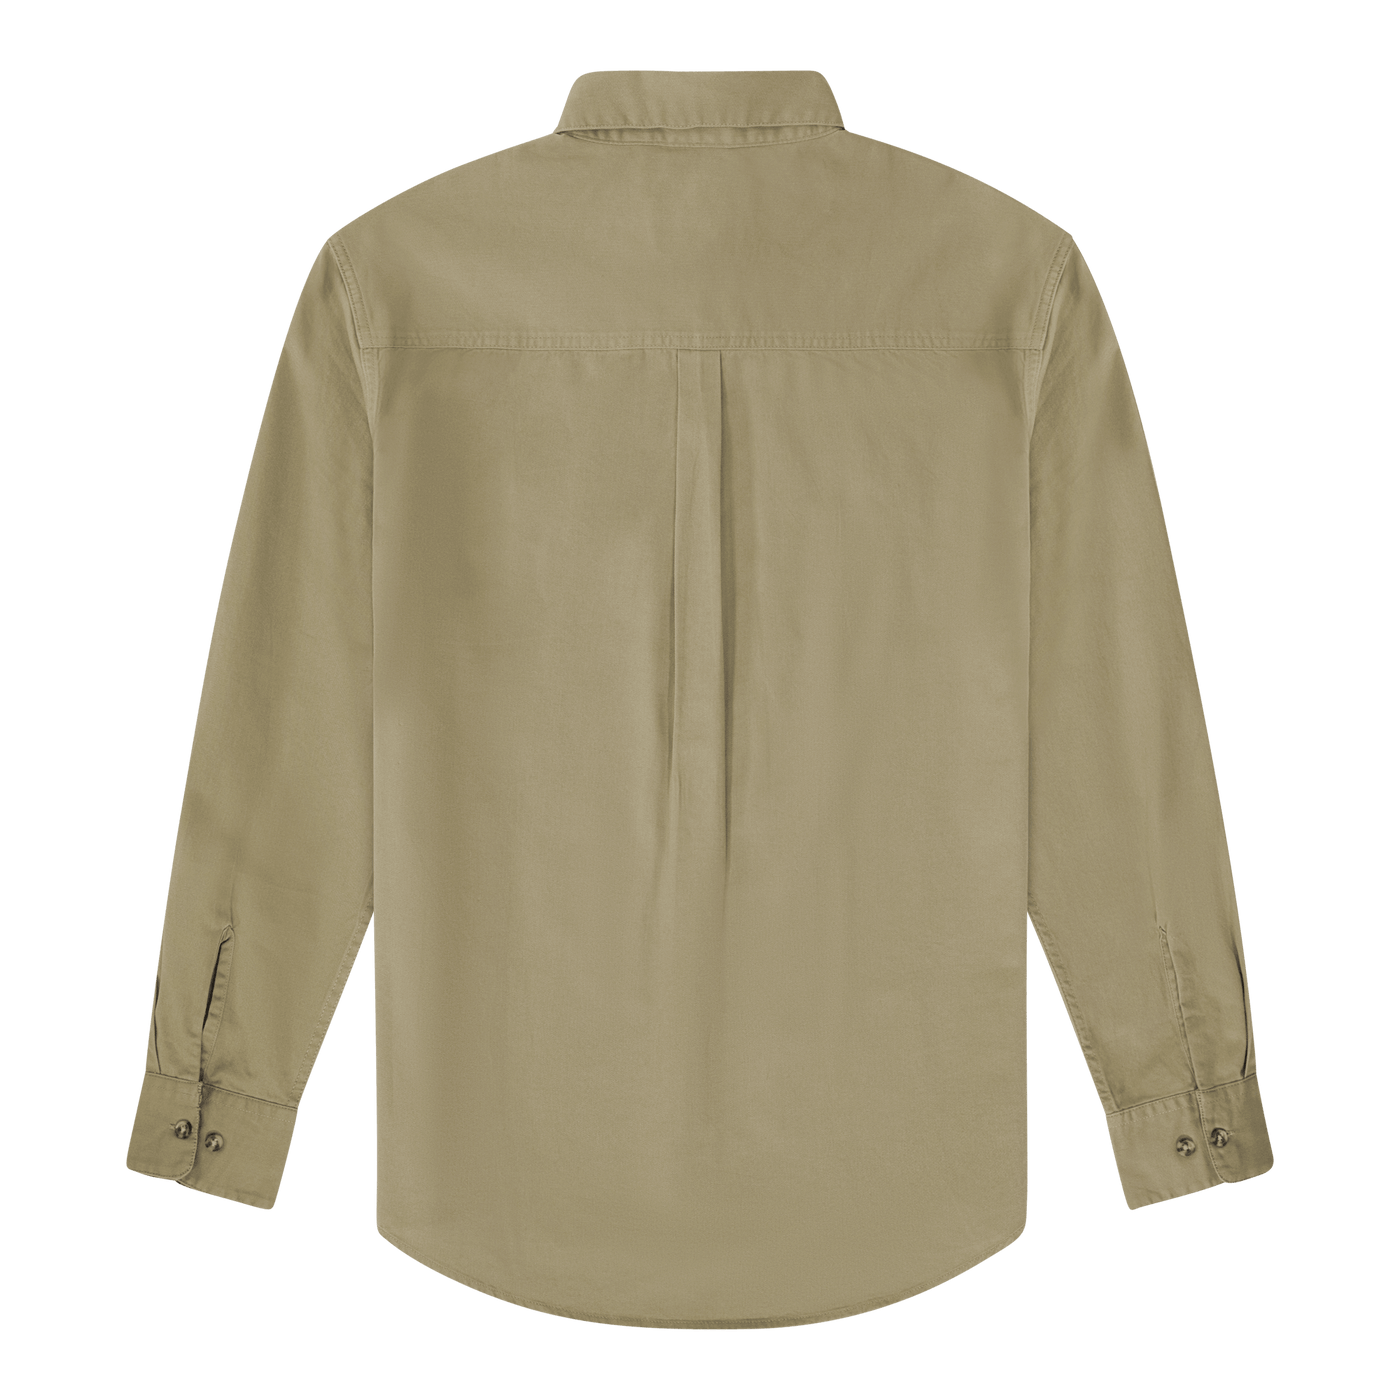 Mossy Oak Companions Long Sleeve Dirt Shirt in color Dirt 